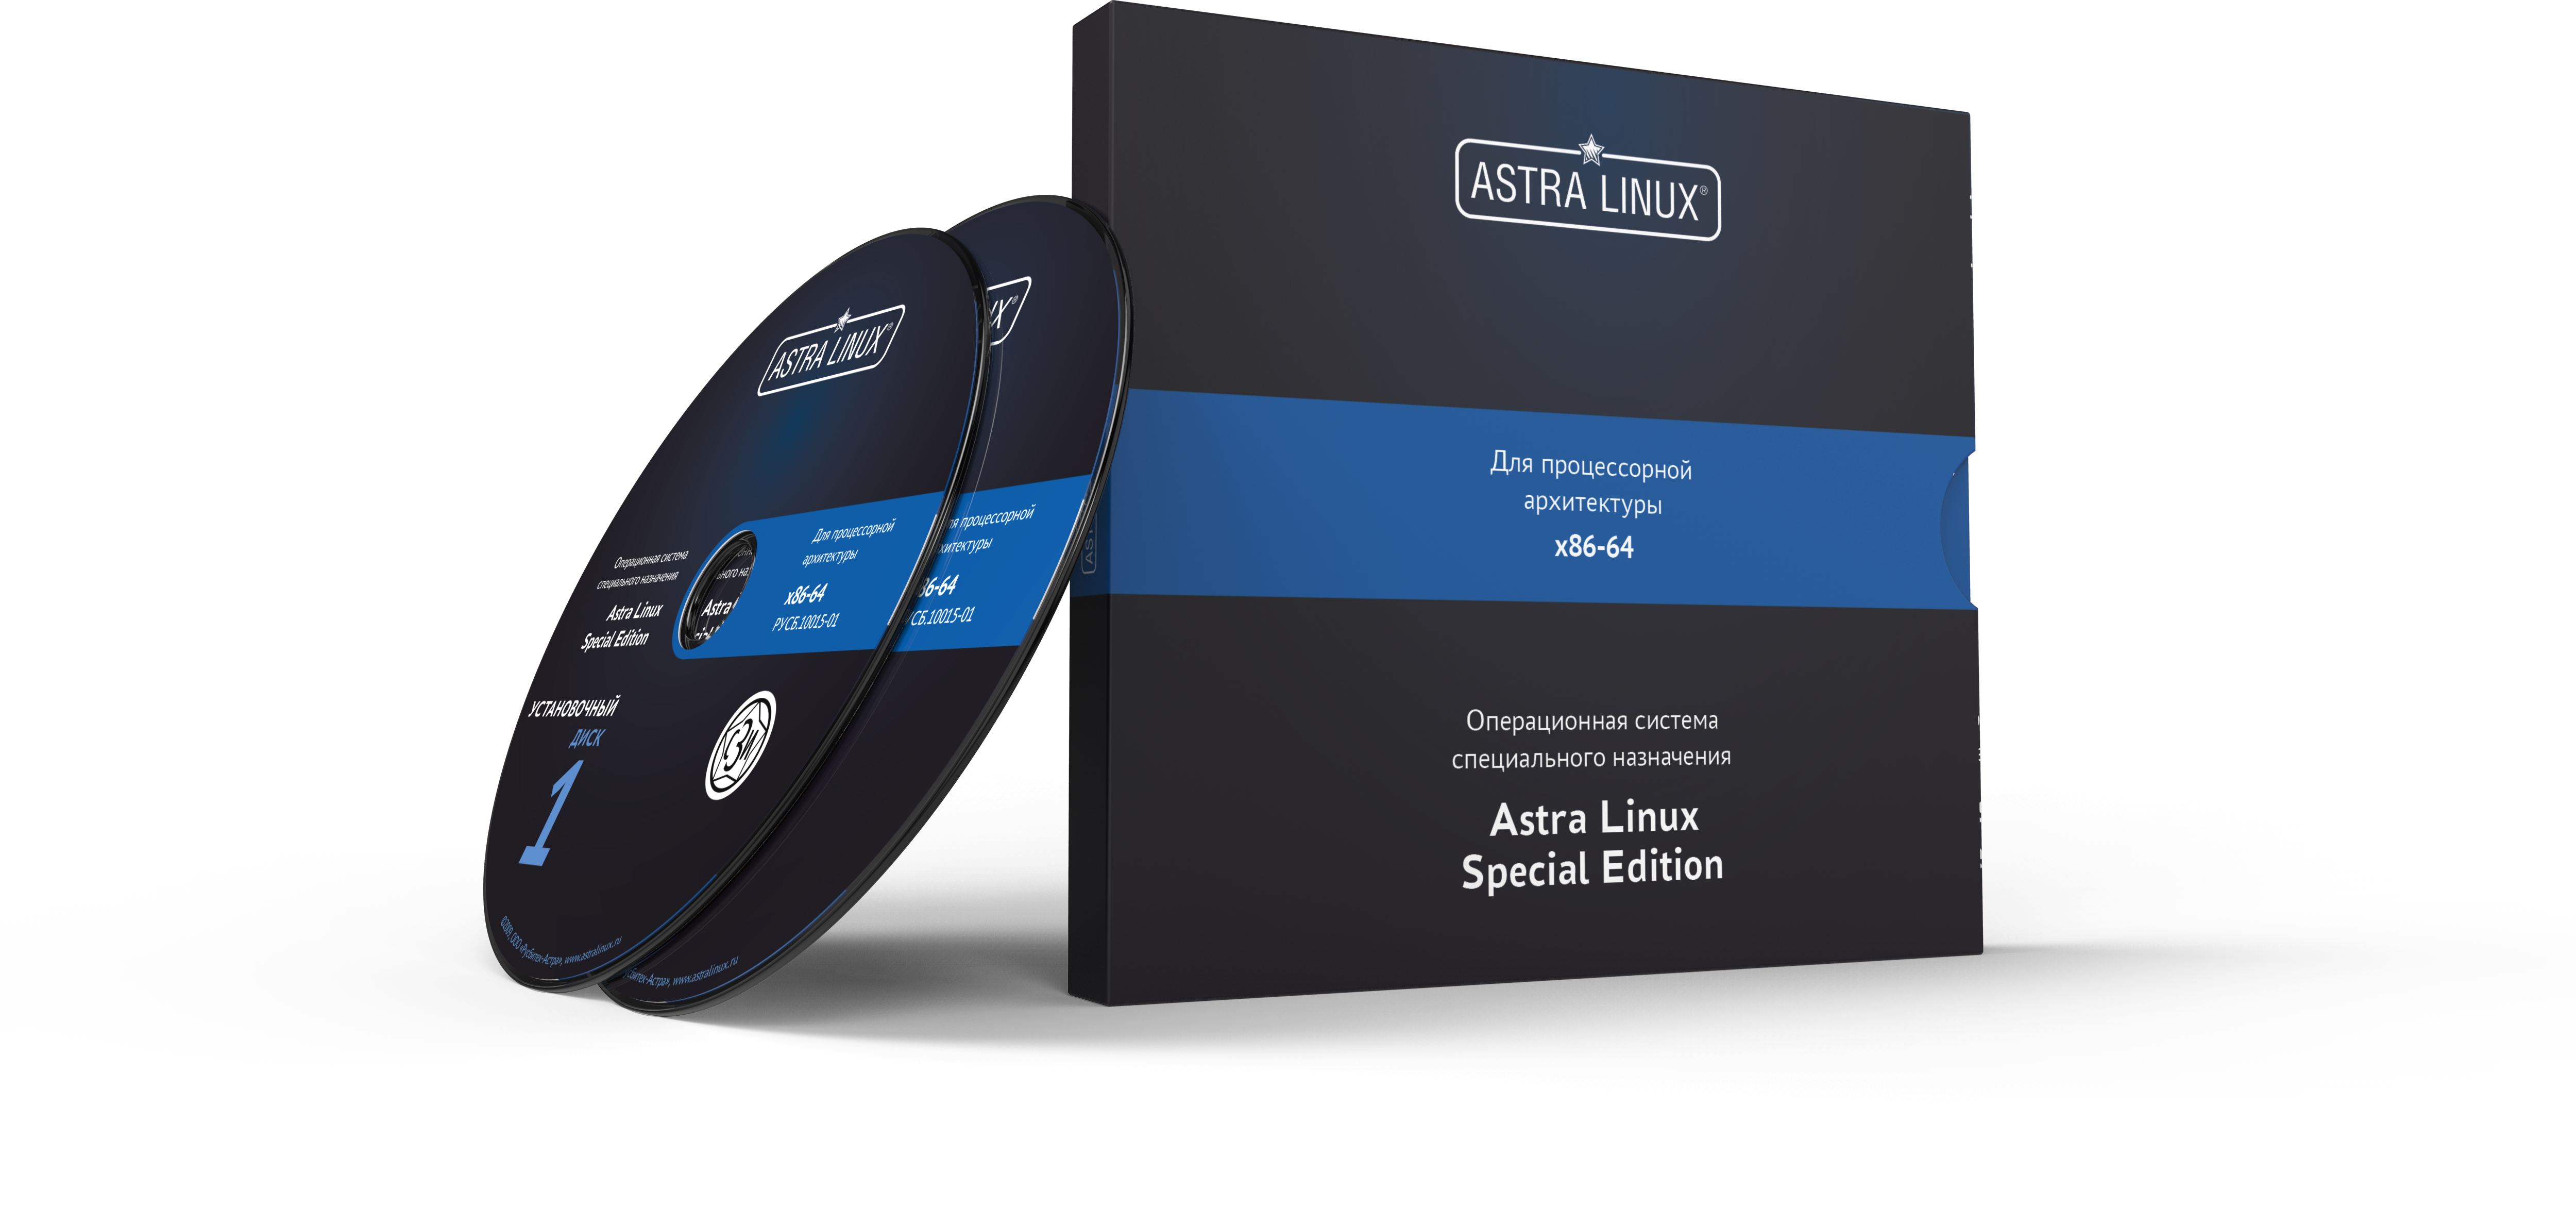 Astra Linux Special Edition 1.7 - Орел, электронный, на 12 мес., ТП "Стандарт" на 12 мес.